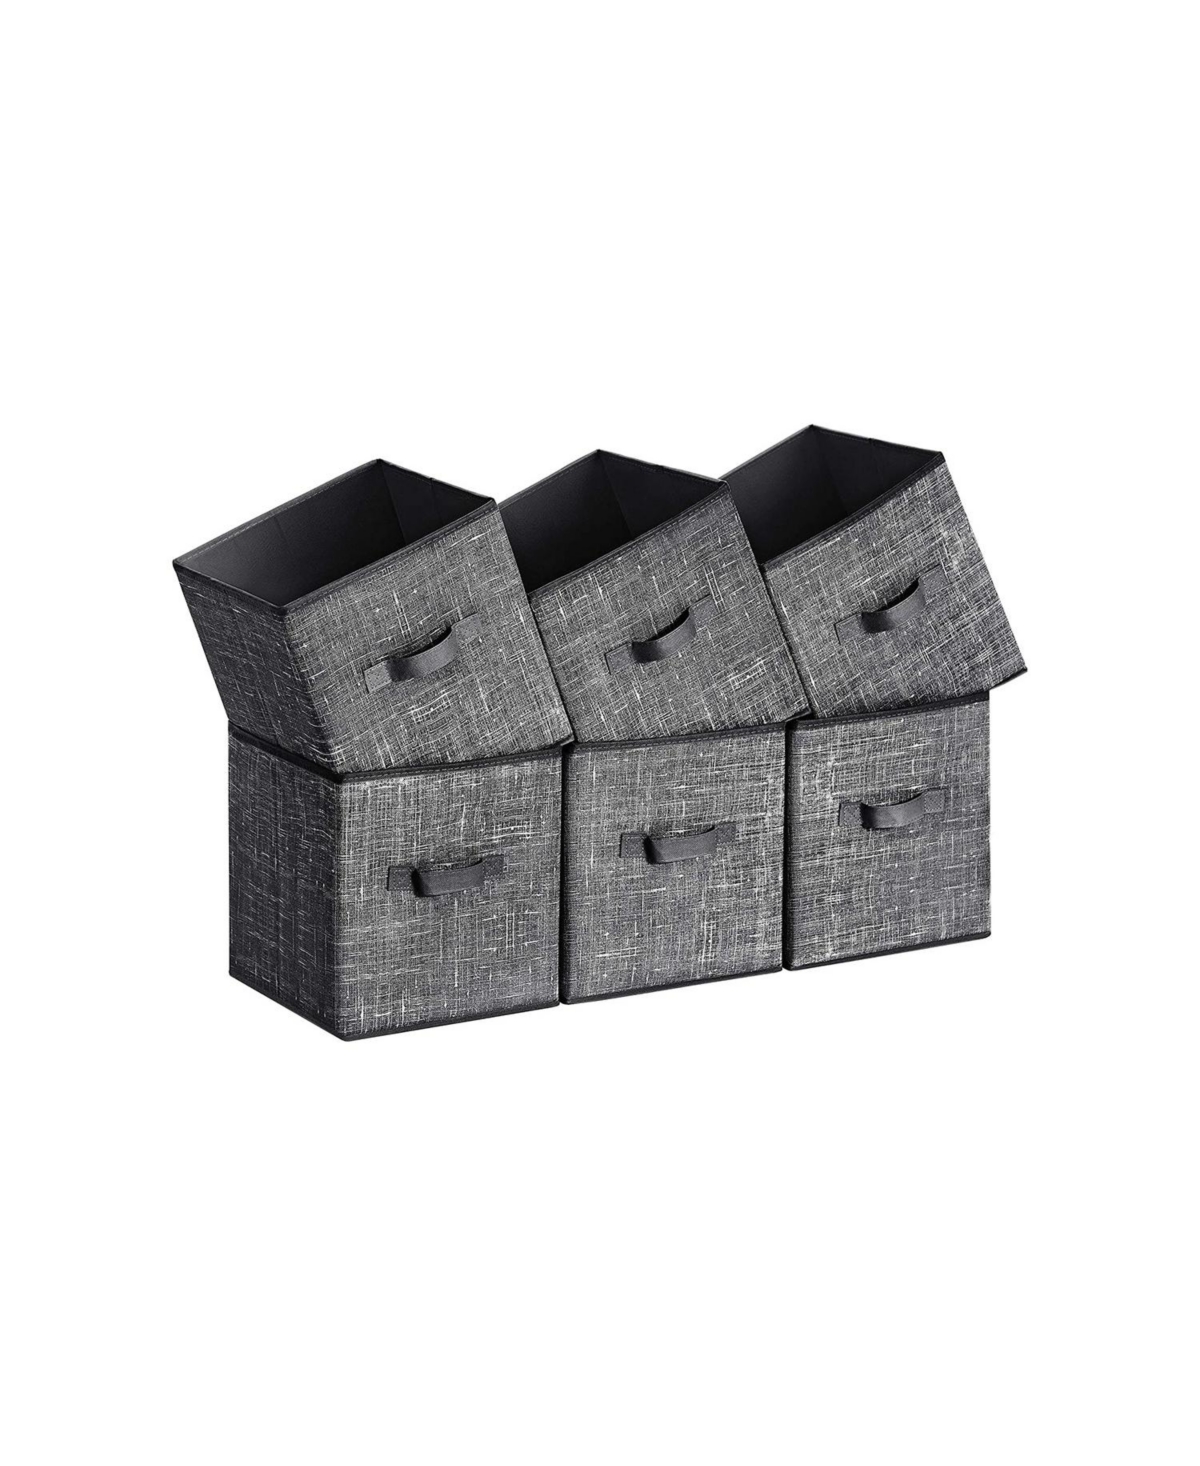 Set Of 6 Fabric Storage Bins, Cube Storage Bins, Fabric Storage Bins With Dual Handles - Pink